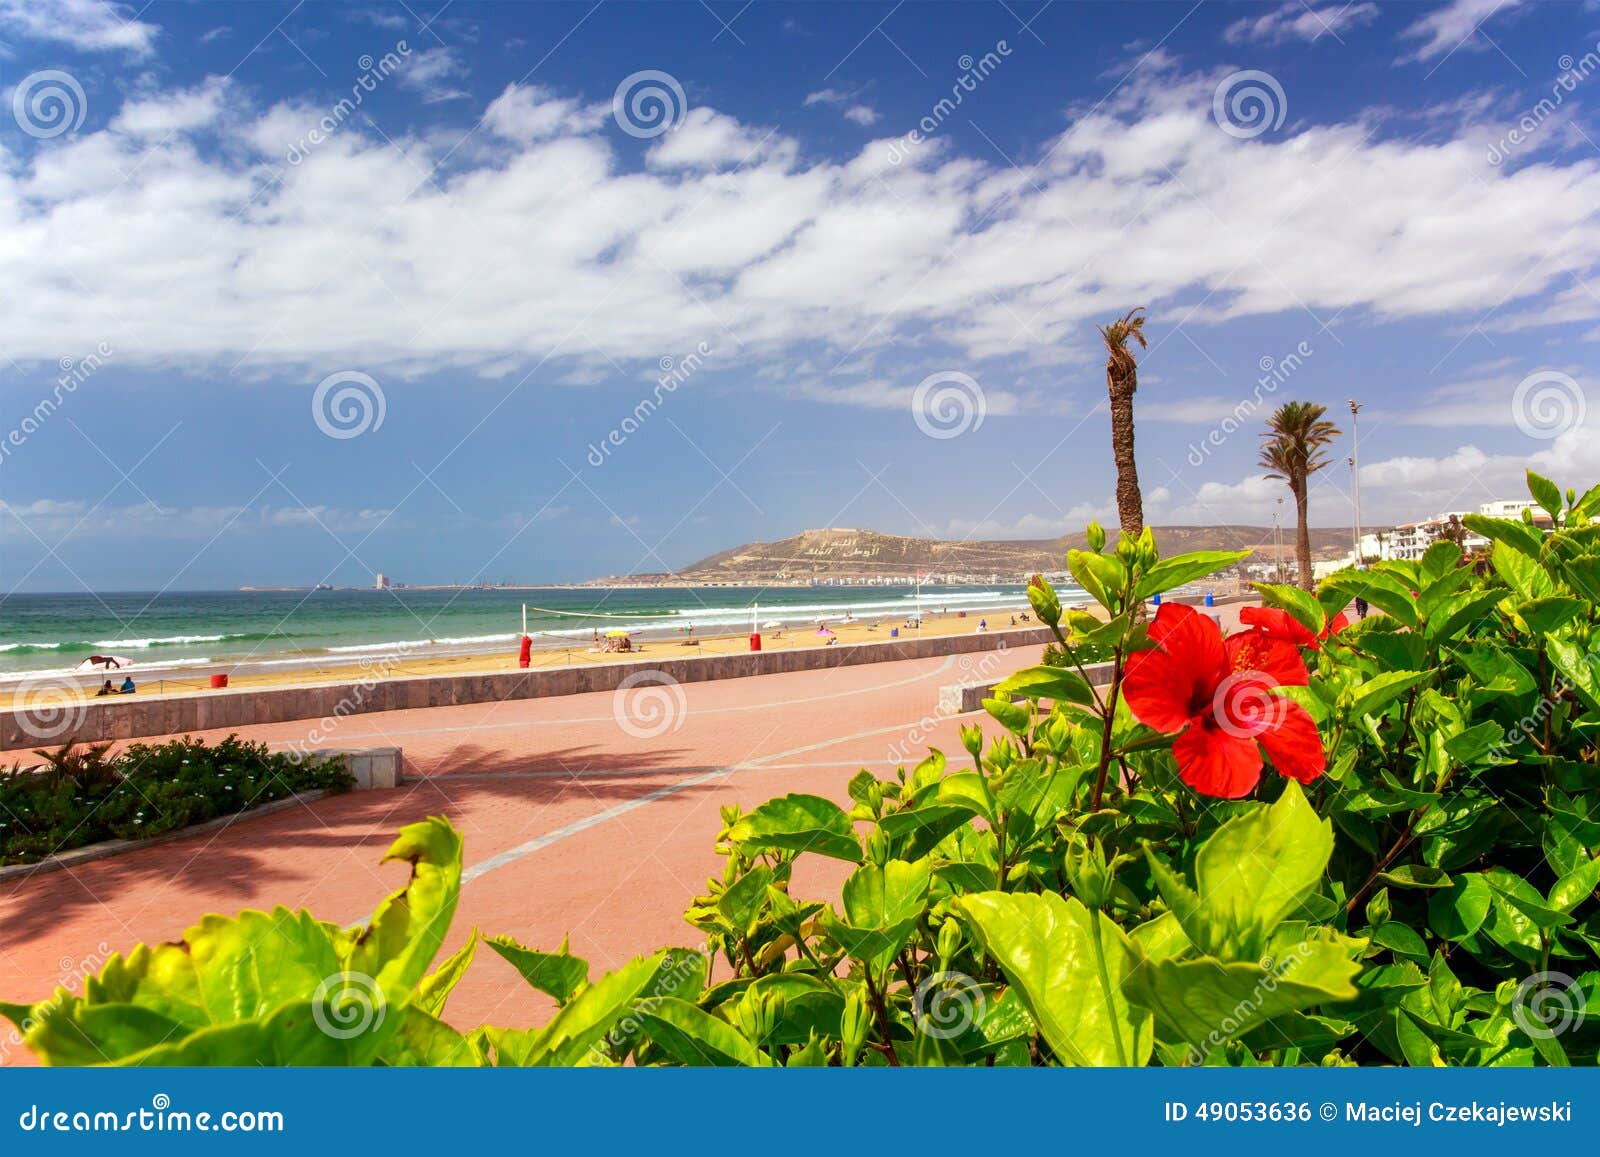 boardwalk in agadir, morocco